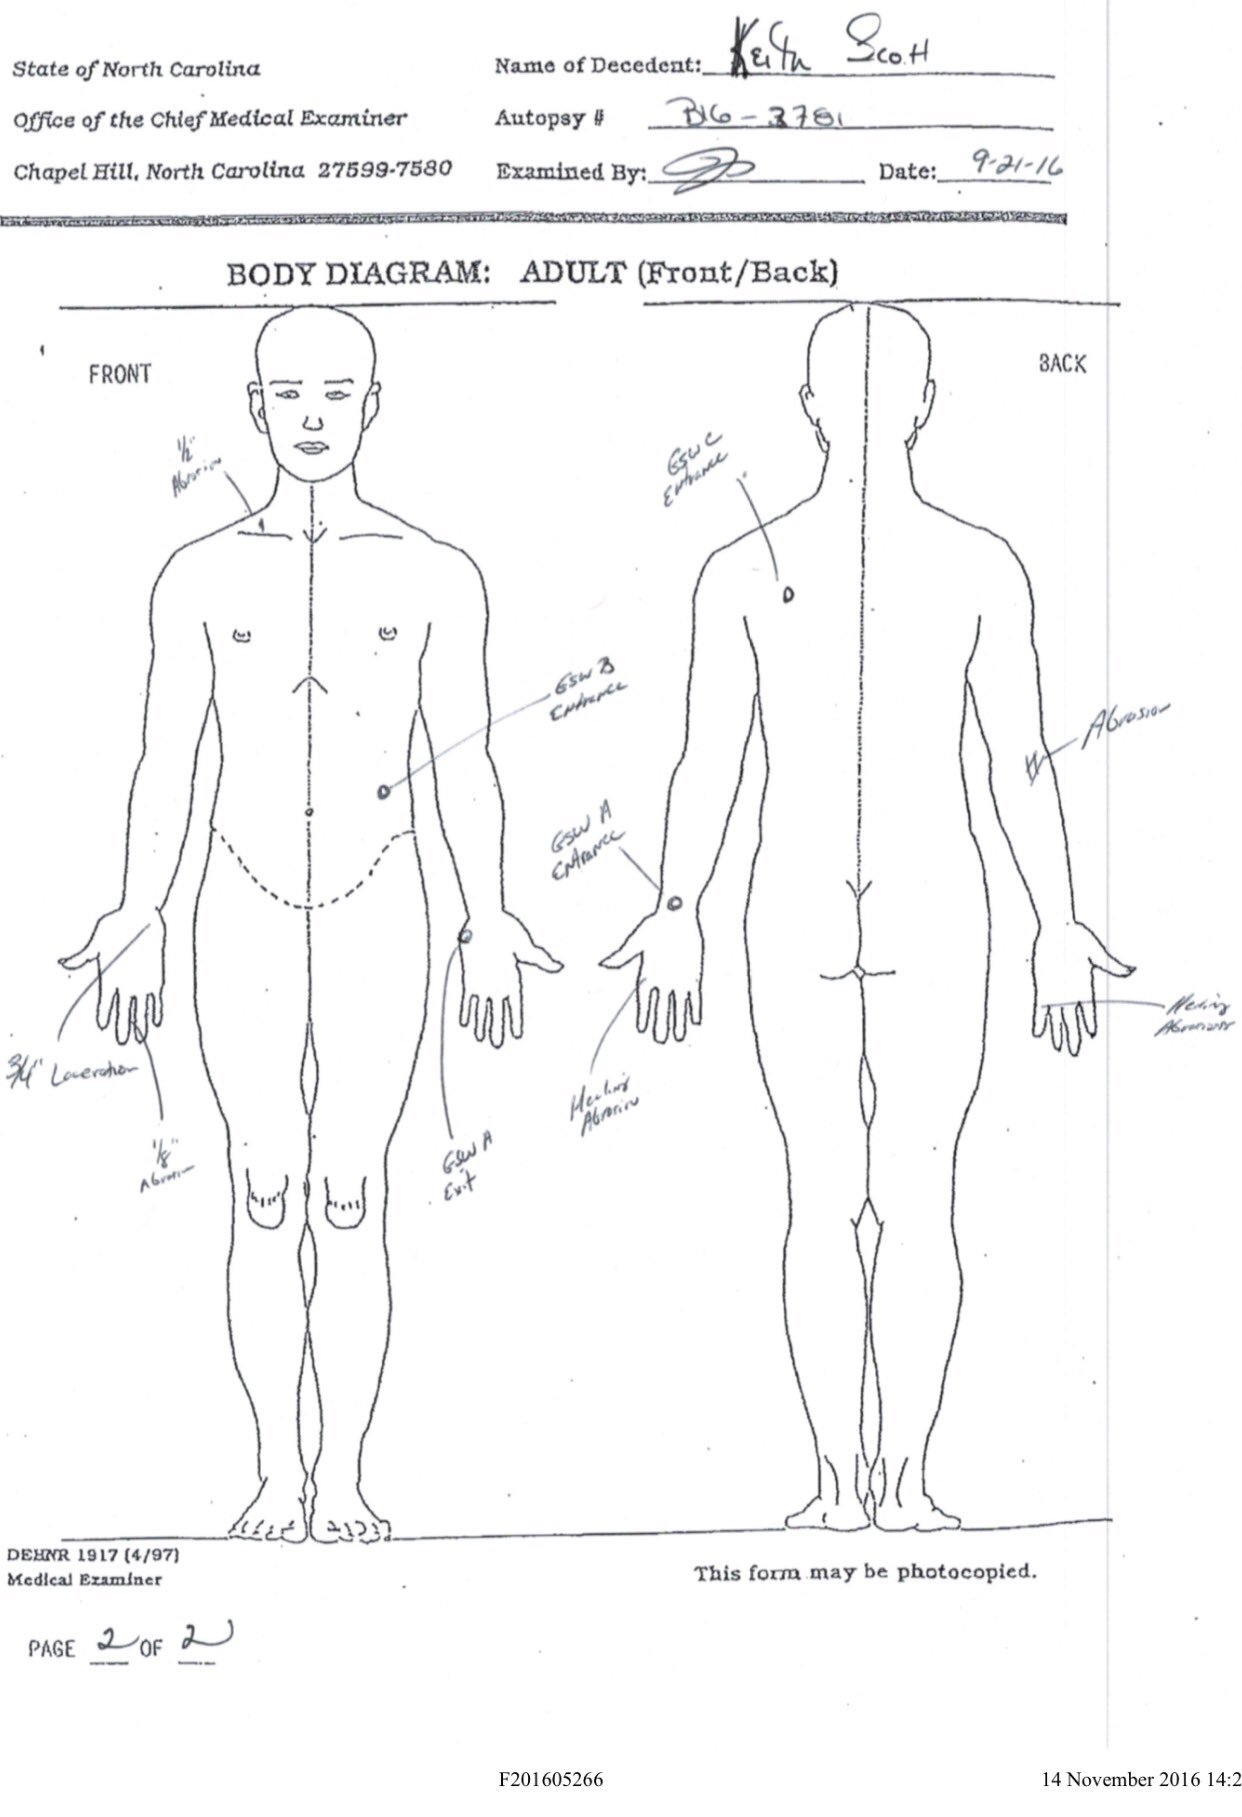 Investigating The Intriguing Gigi Autopsy Sketch